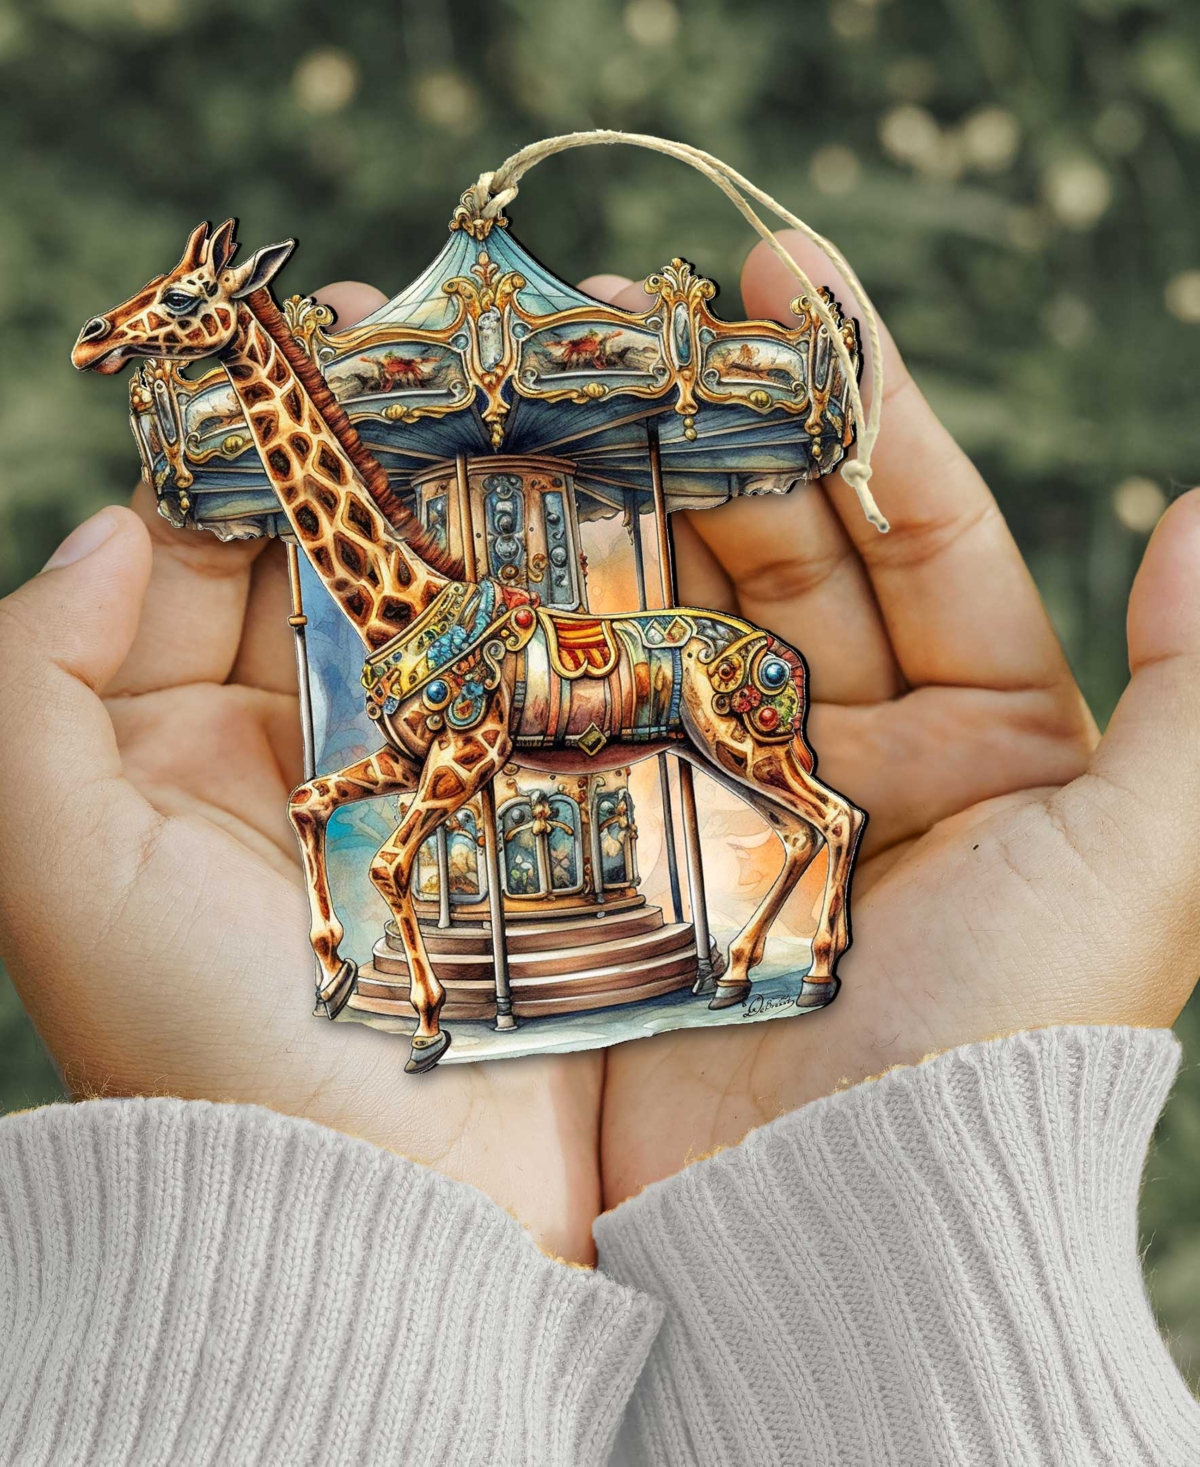 Shop Designocracy Carousel Giraffe Christmas Wooden Ornaments Holiday Decor G. Debrekht In Multi Color